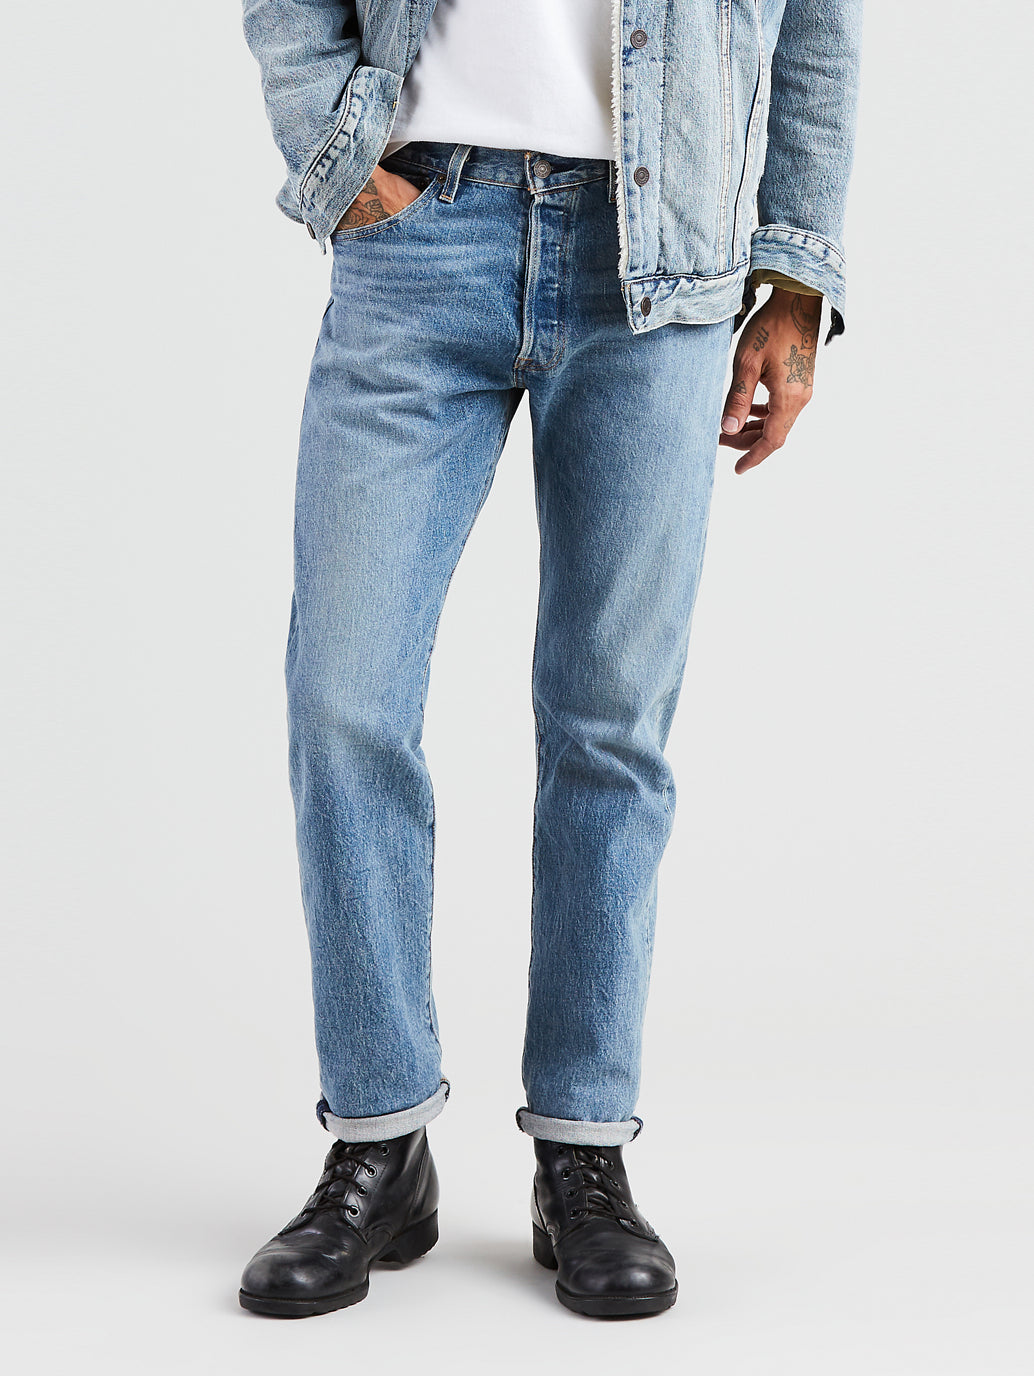 Levi's Men's 501 Original Shrink-To-Fit Regular Straight Leg Jeans